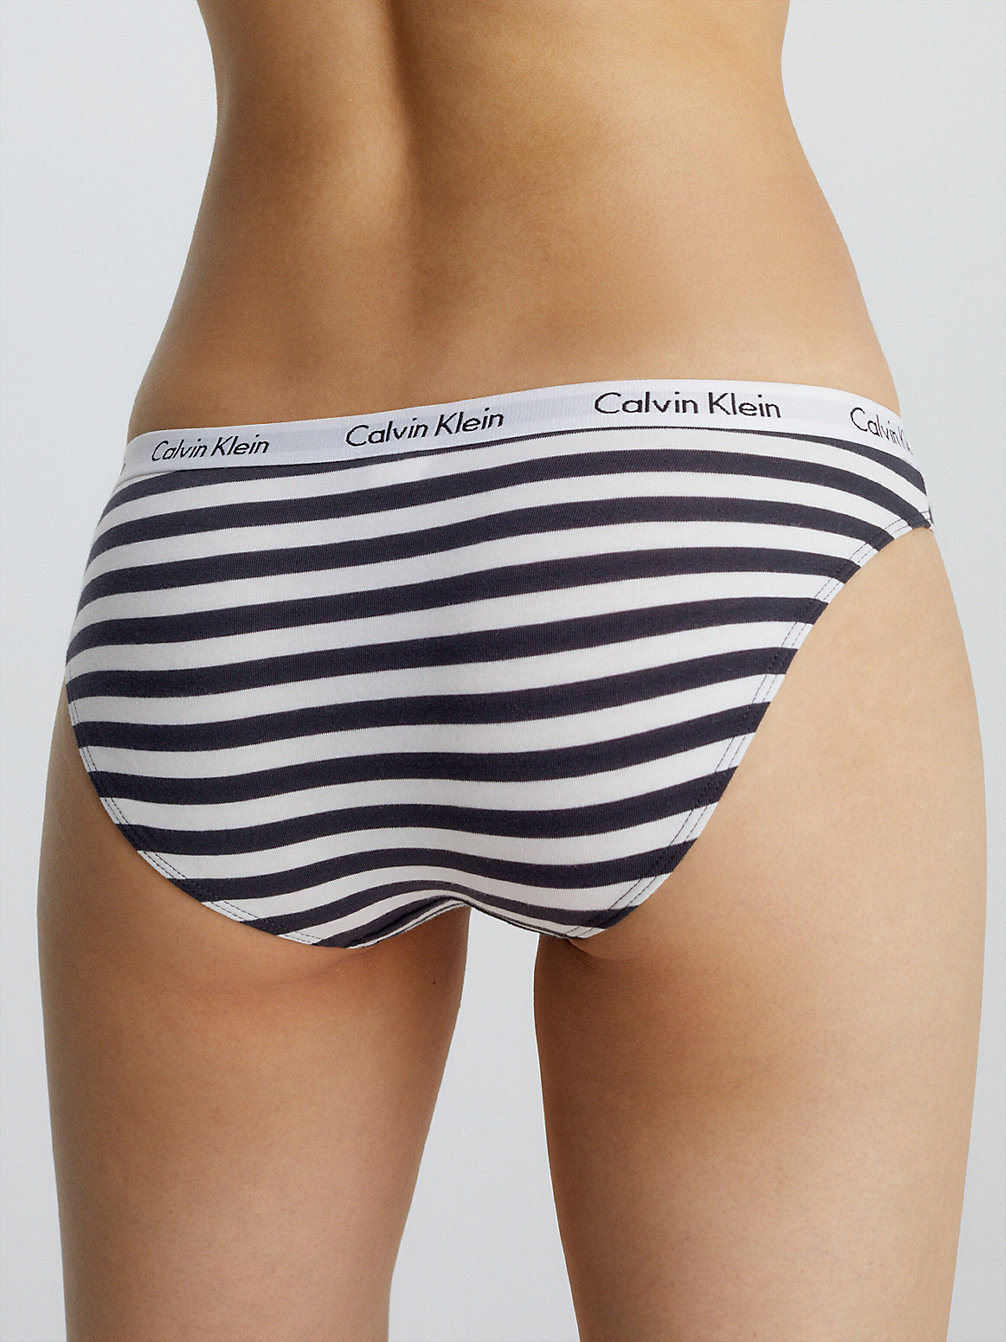 Slip Bikini - Carousel > RAINER/BLUE GRAPHITE > undefined donna > Calvin Klein